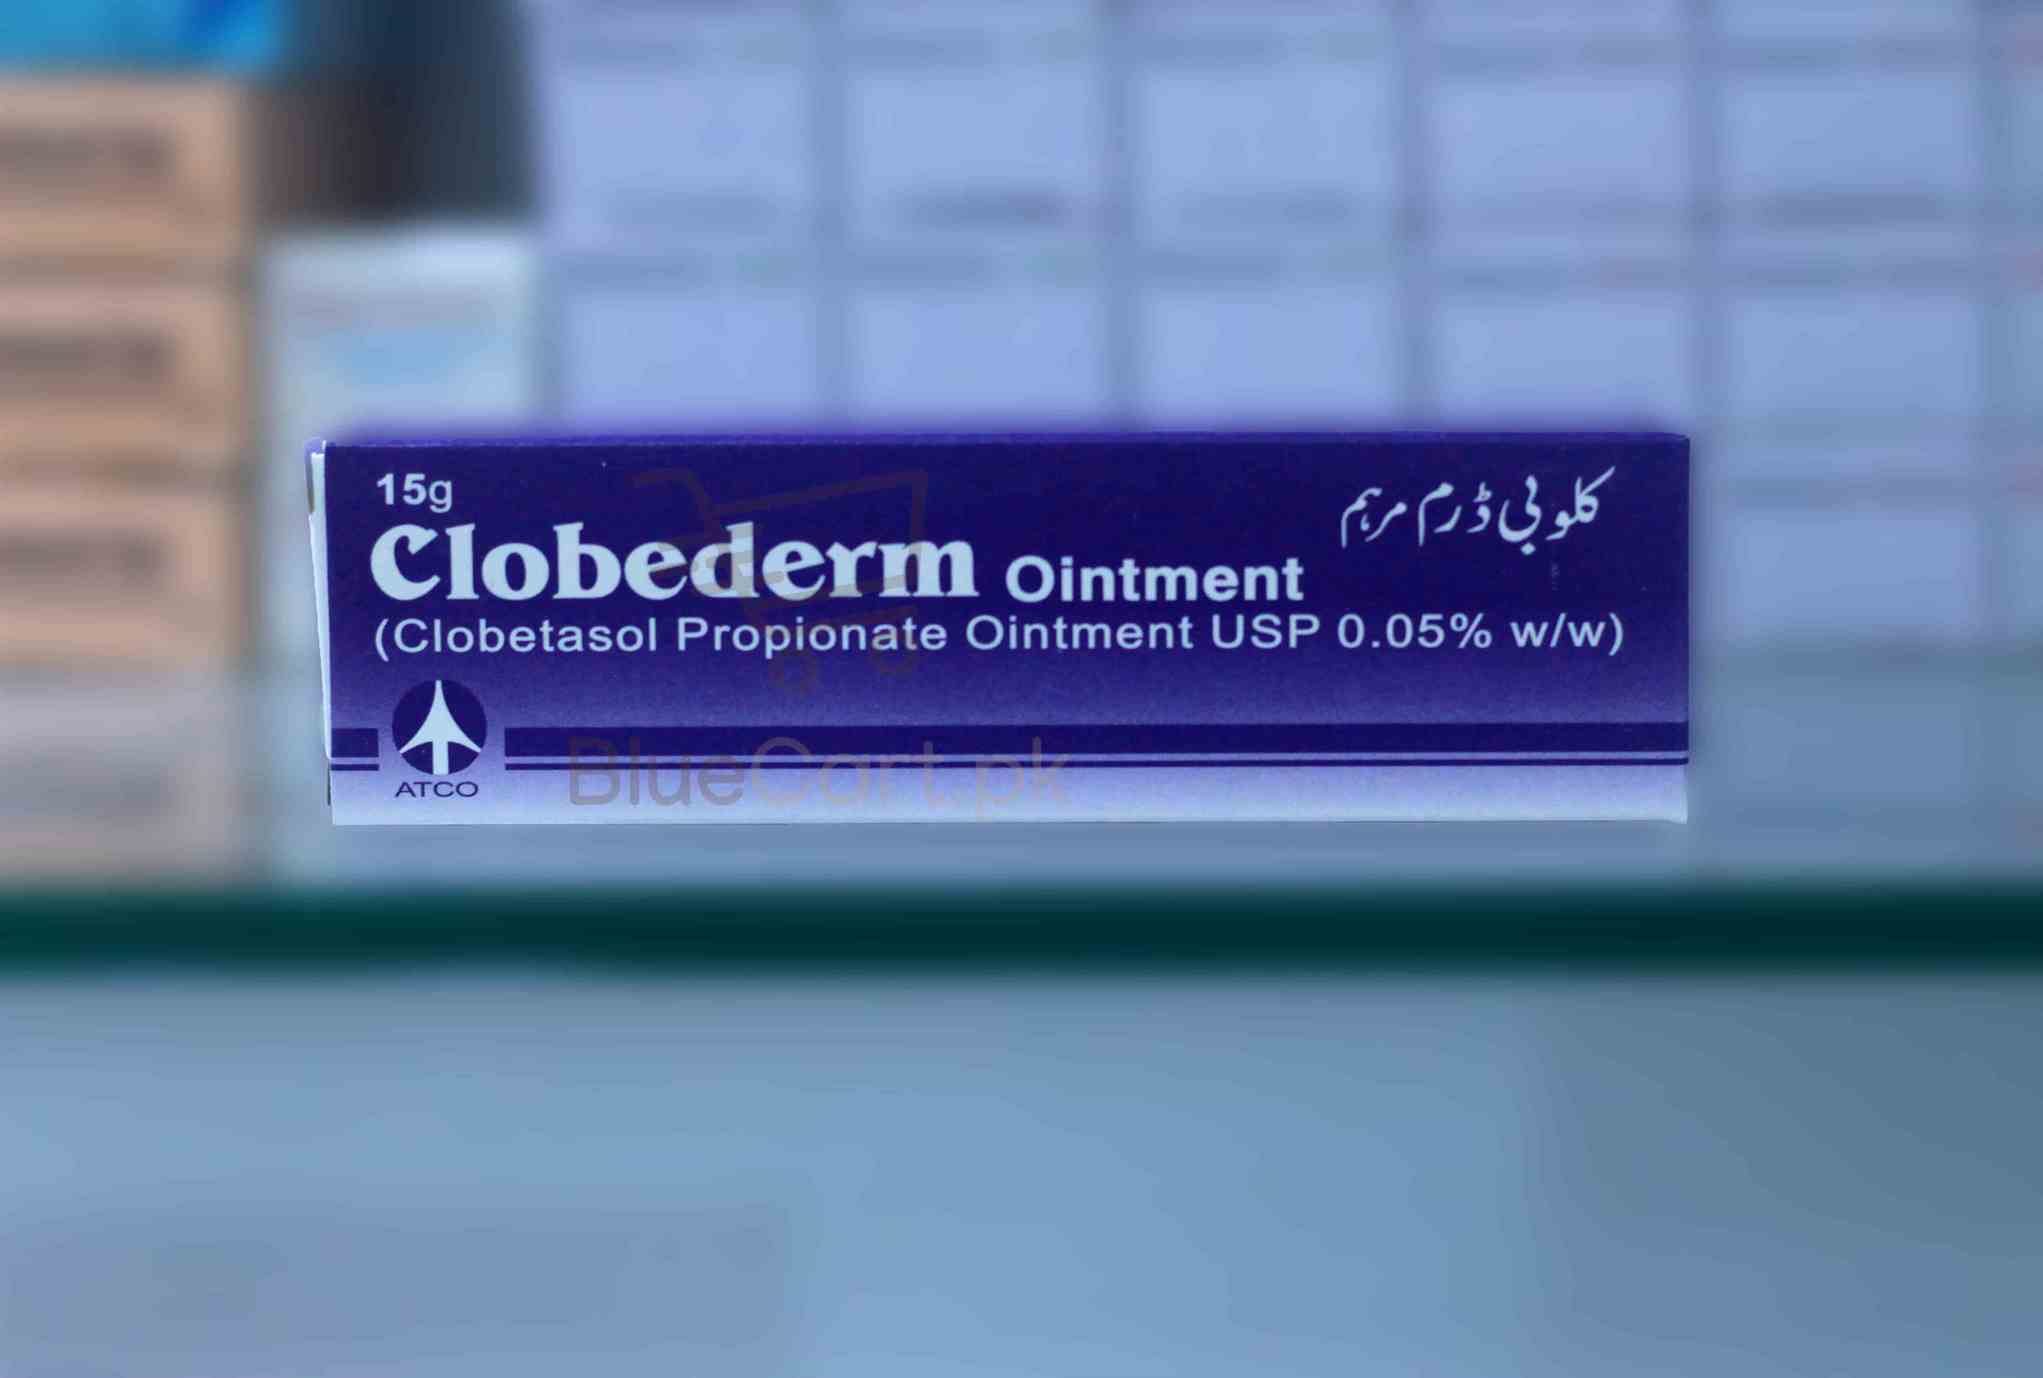 Clobederm Ointment